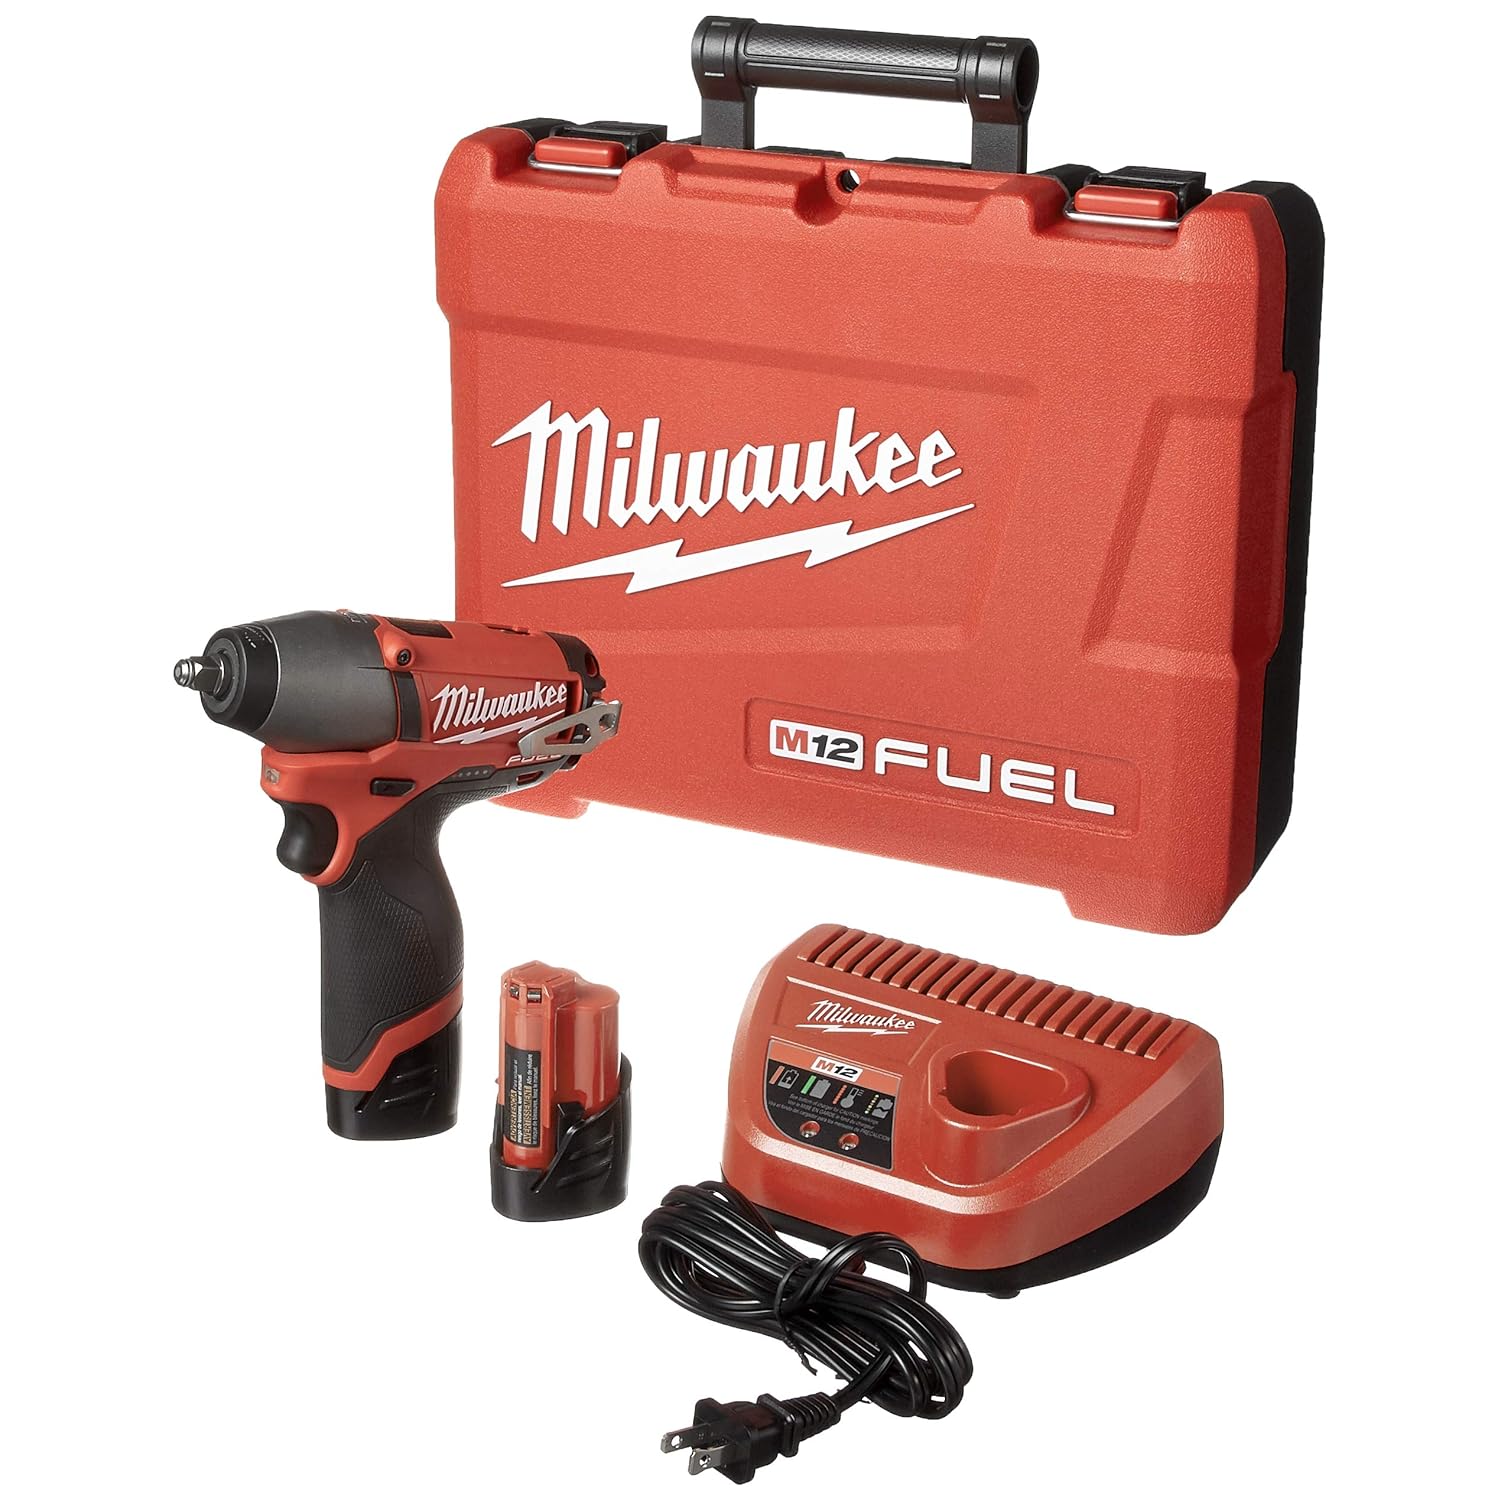 Milwaukee 2454-22 M12 Fuel 3/8 Impact Wrench Kit W/2 Bat